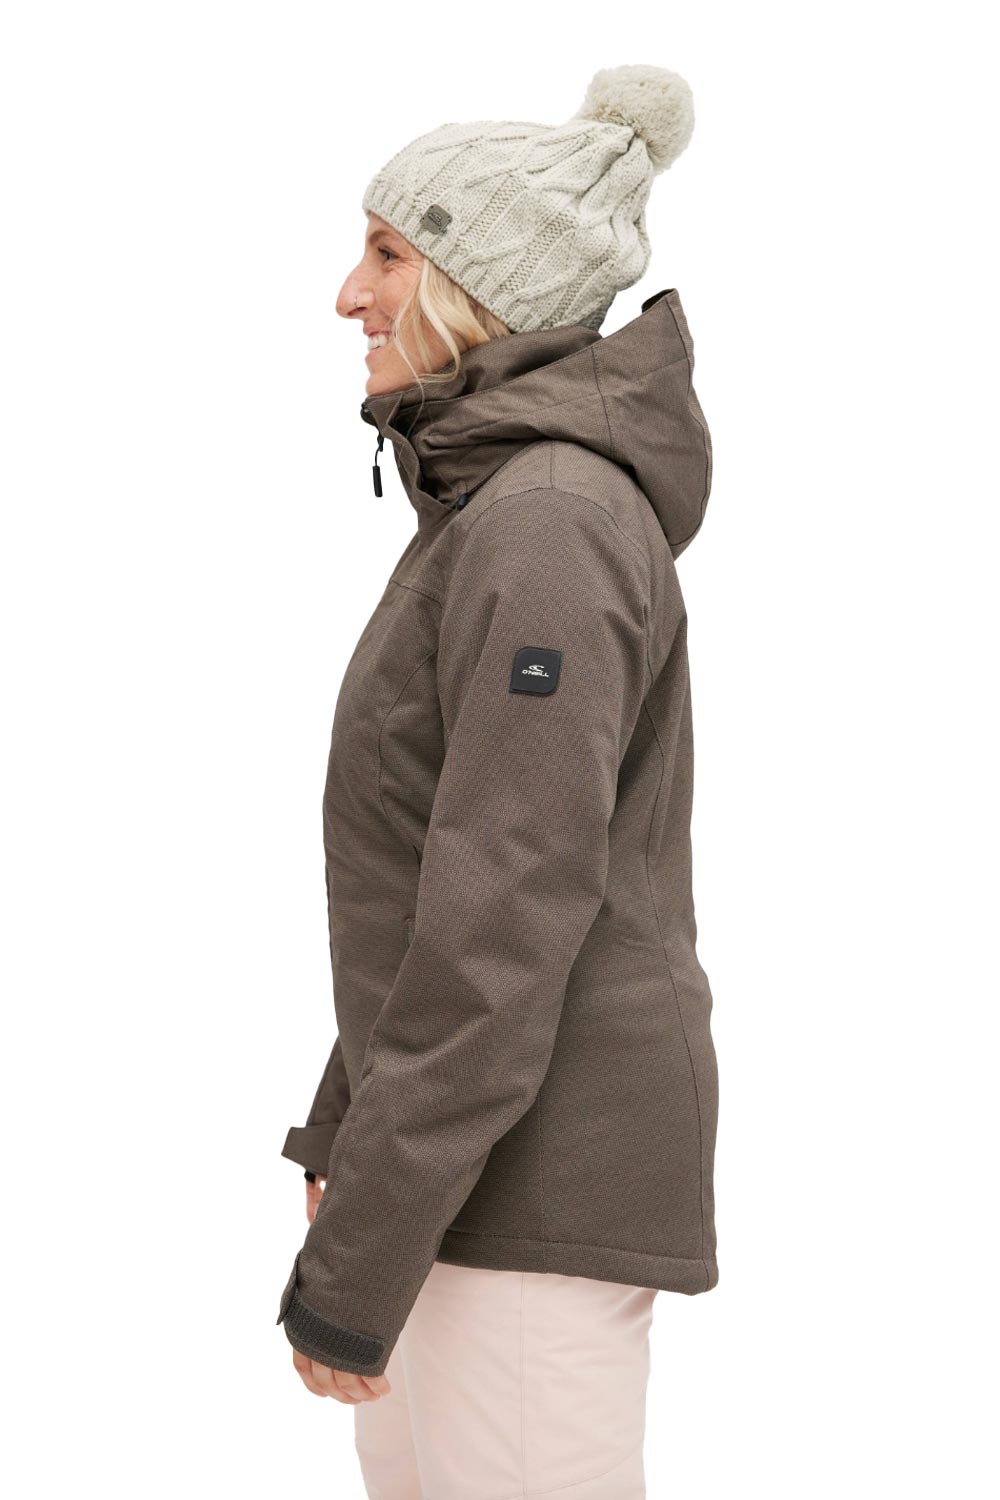 women's O'Neill snowboard jacket, brown